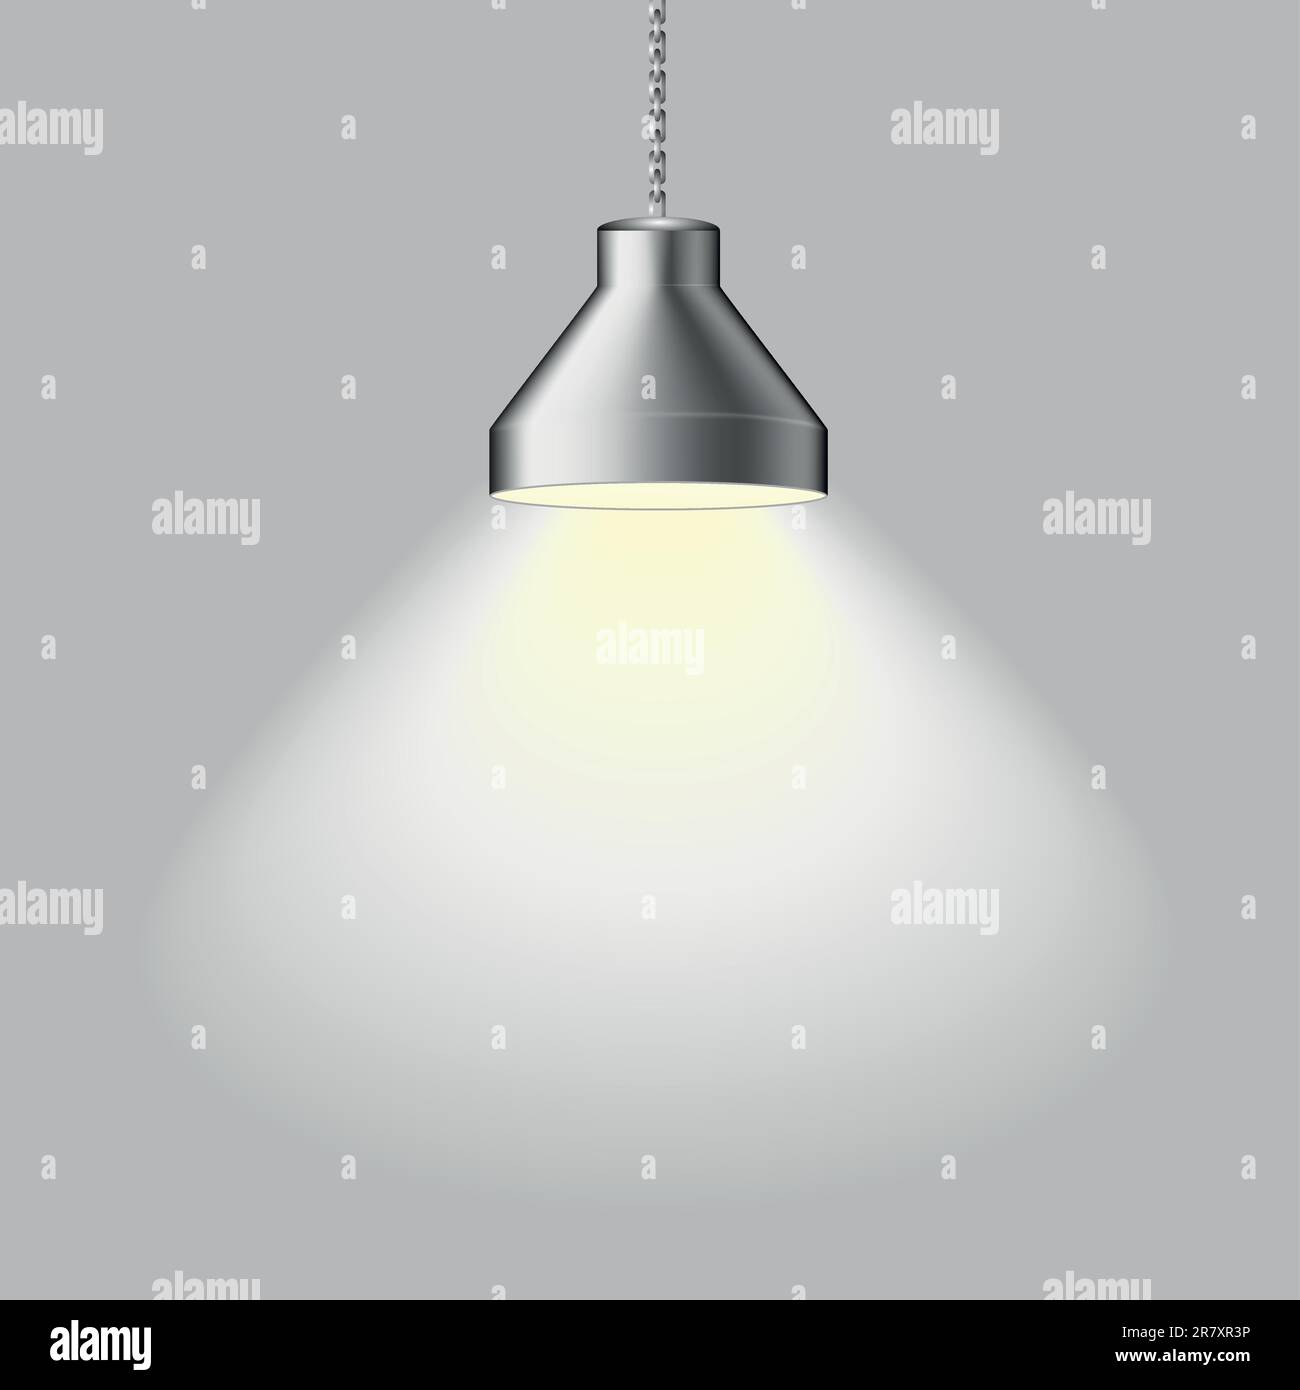 illustration of an illuminated ceiling lamp, eps 8 vector Stock Vector  Image & Art - Alamy